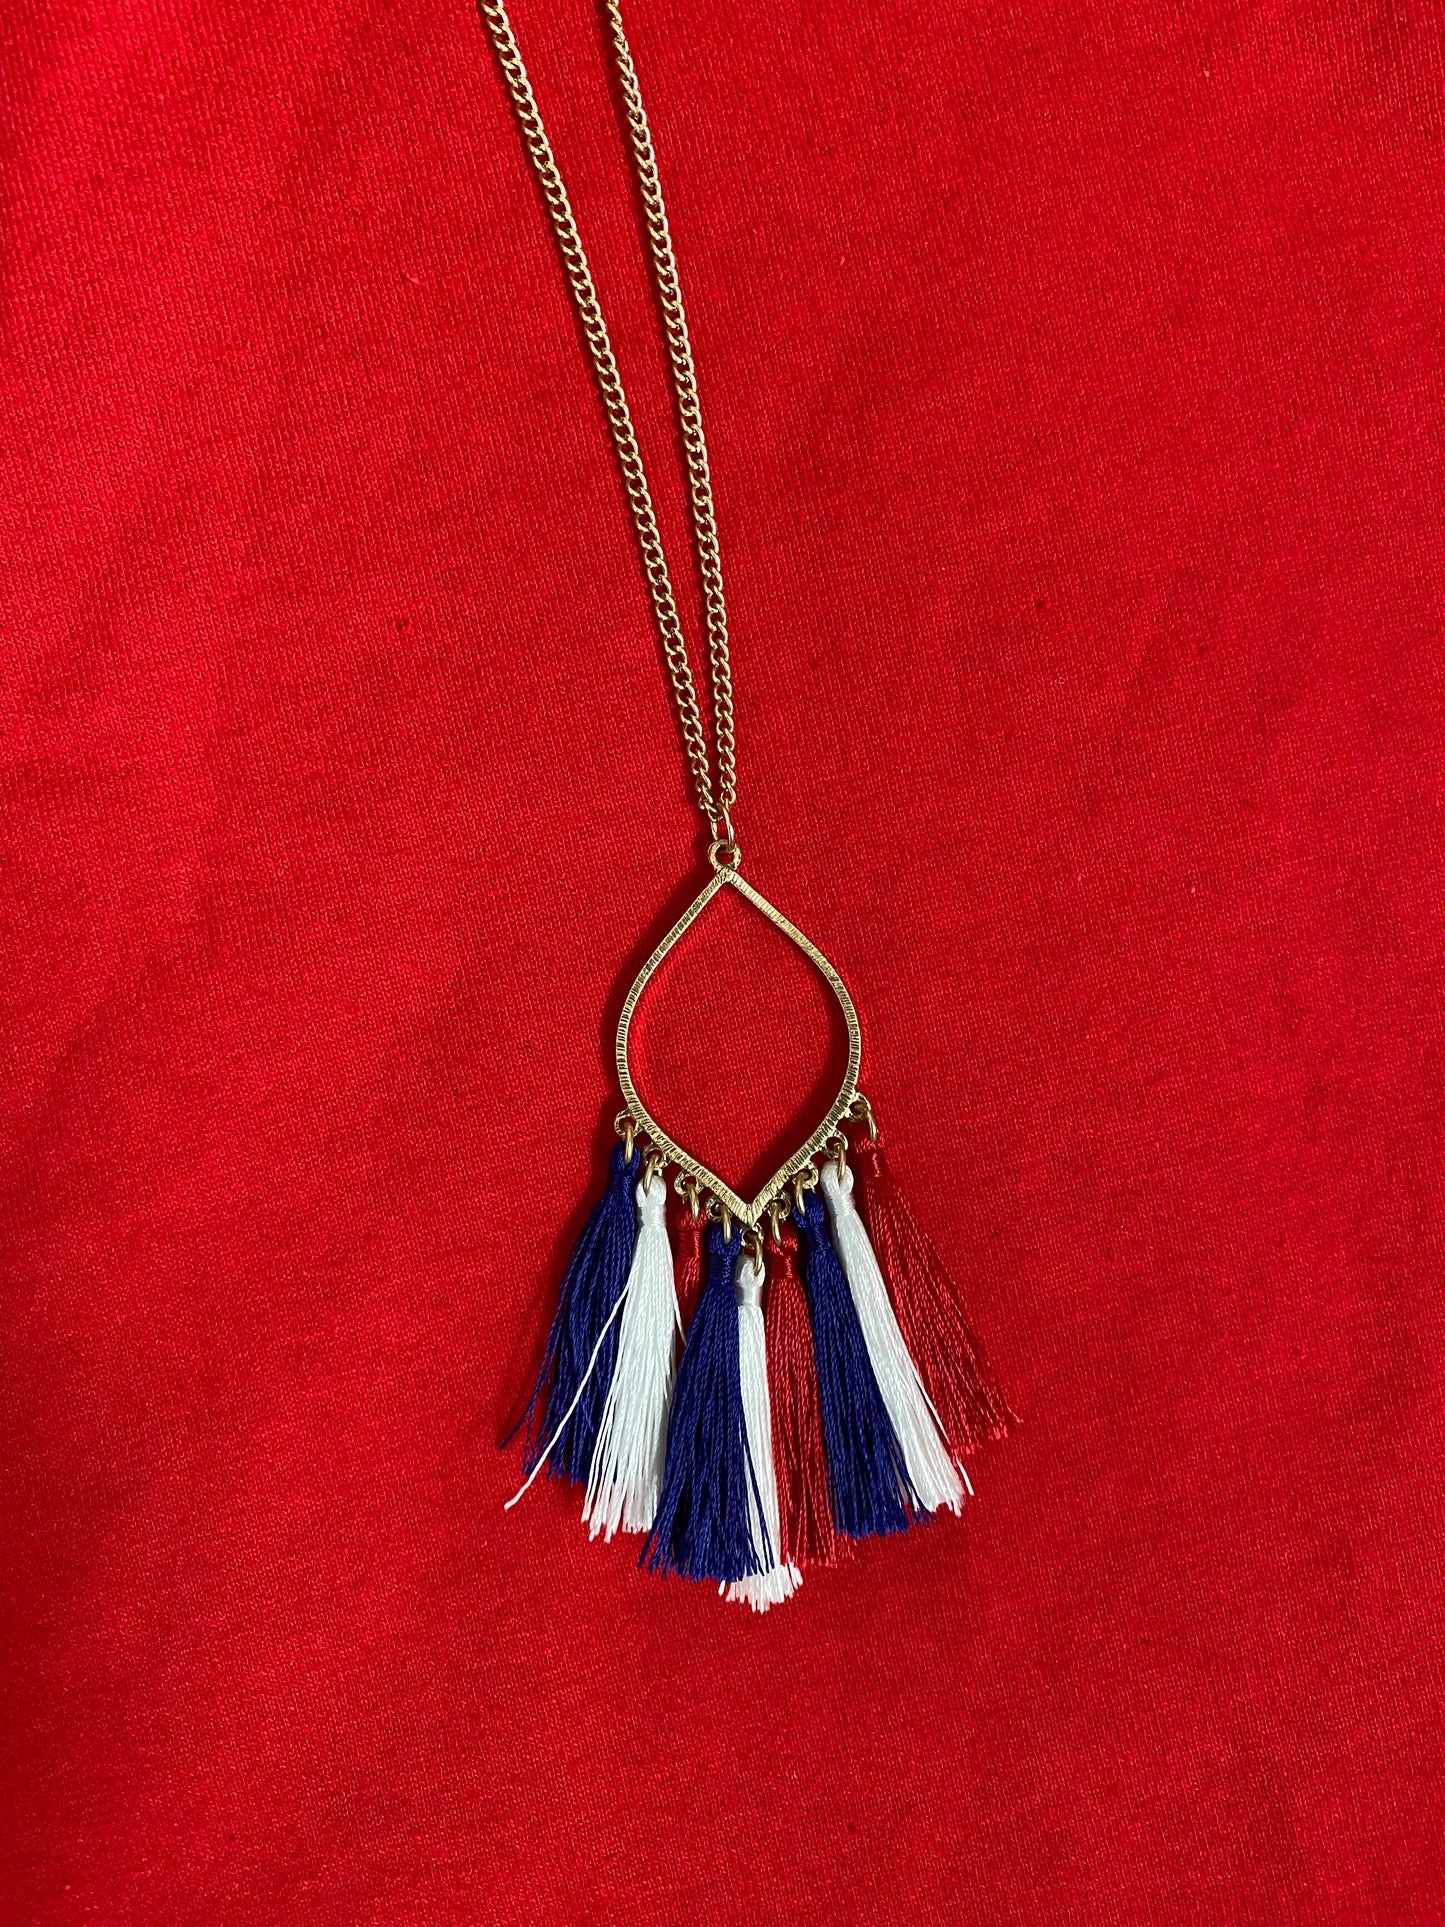 America necklace